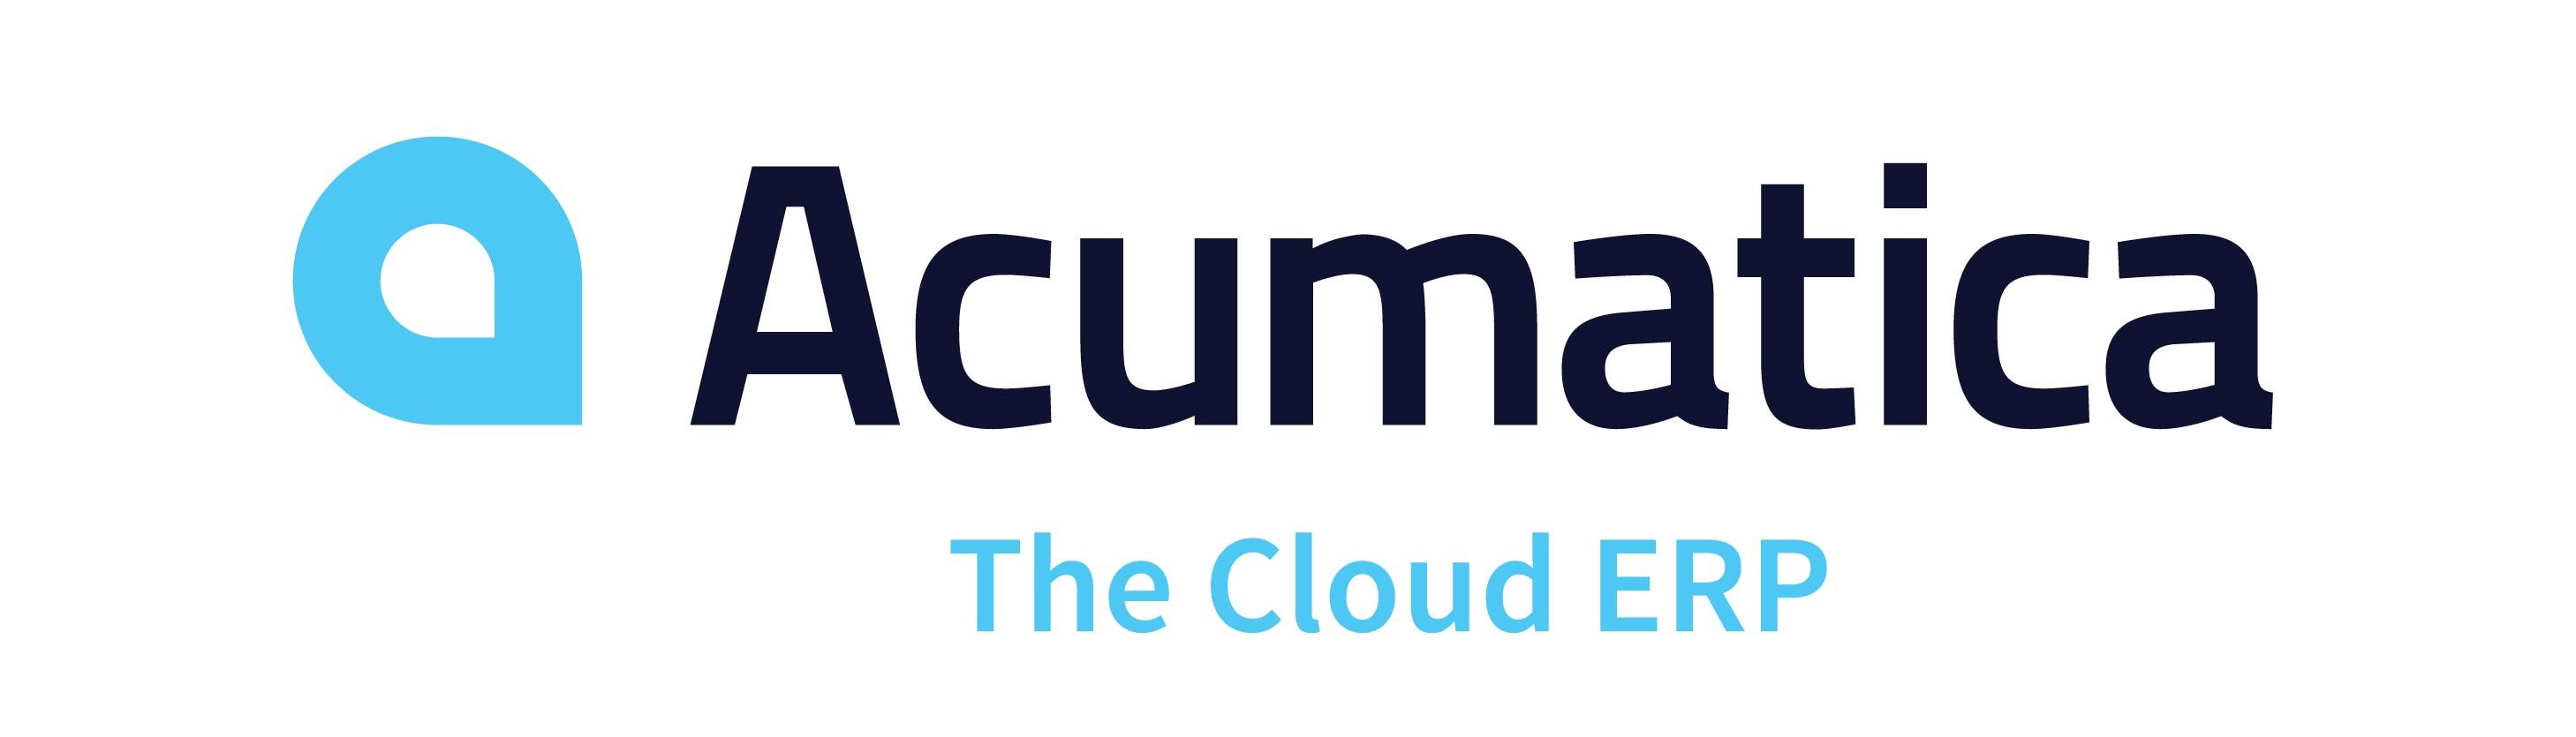 Acumatica Logo - Acumatica Logo - Finance Malta Events : Finance Malta Events